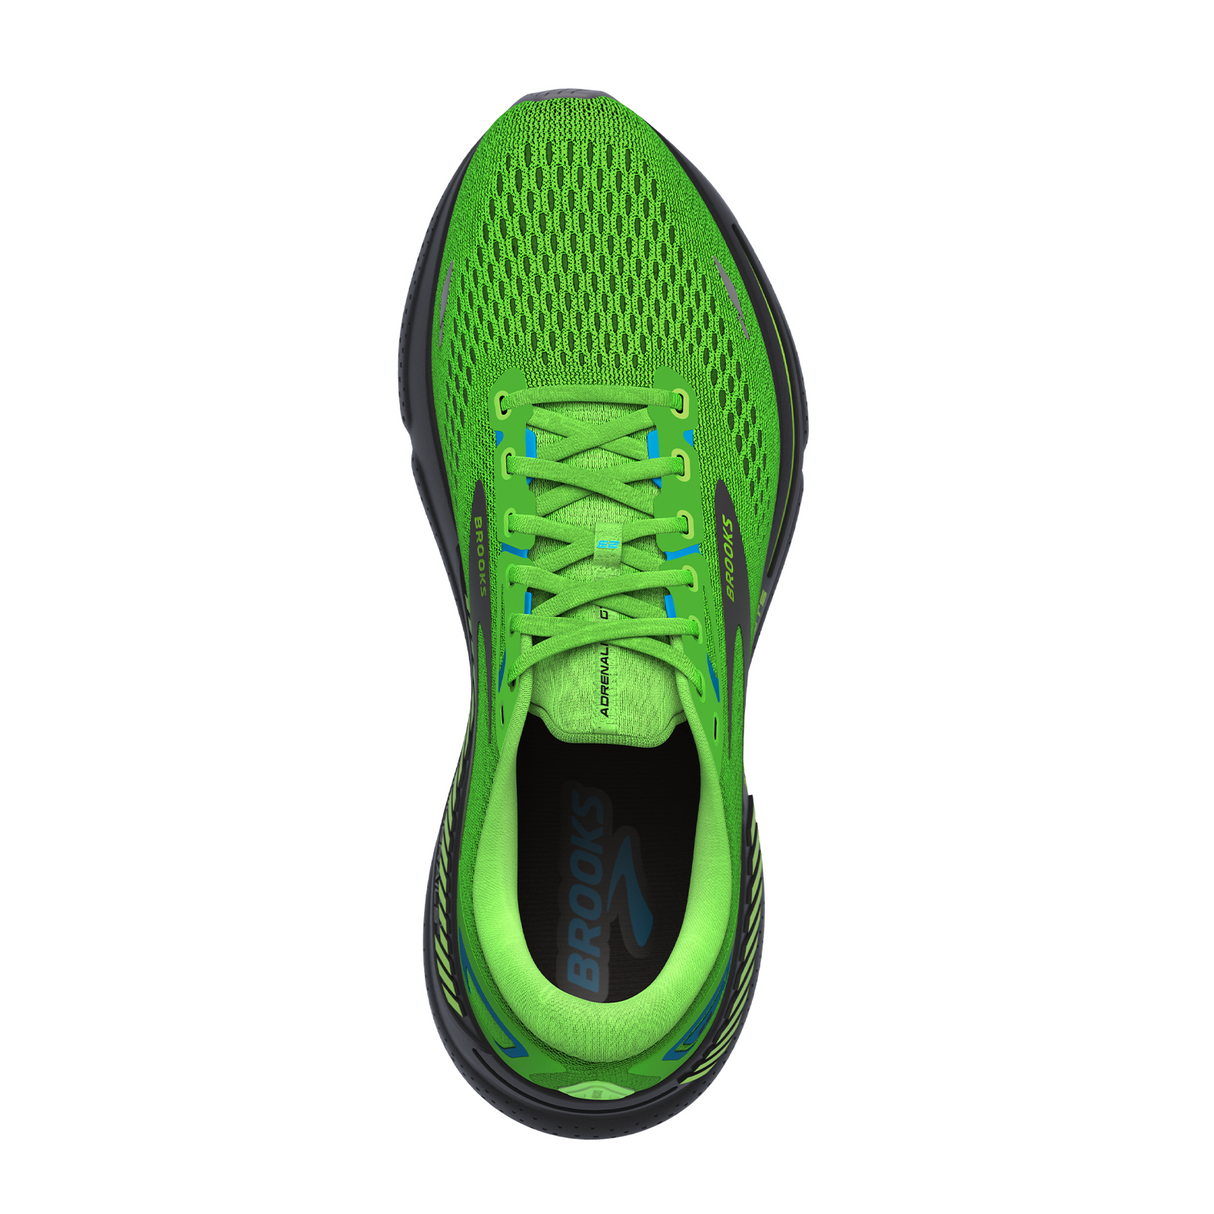 Brooks Adrenaline GTS 23 Running Shoe (Men) - Green Gecko/Grey/Atomic Blue Athletic - Running - The Heel Shoe Fitters